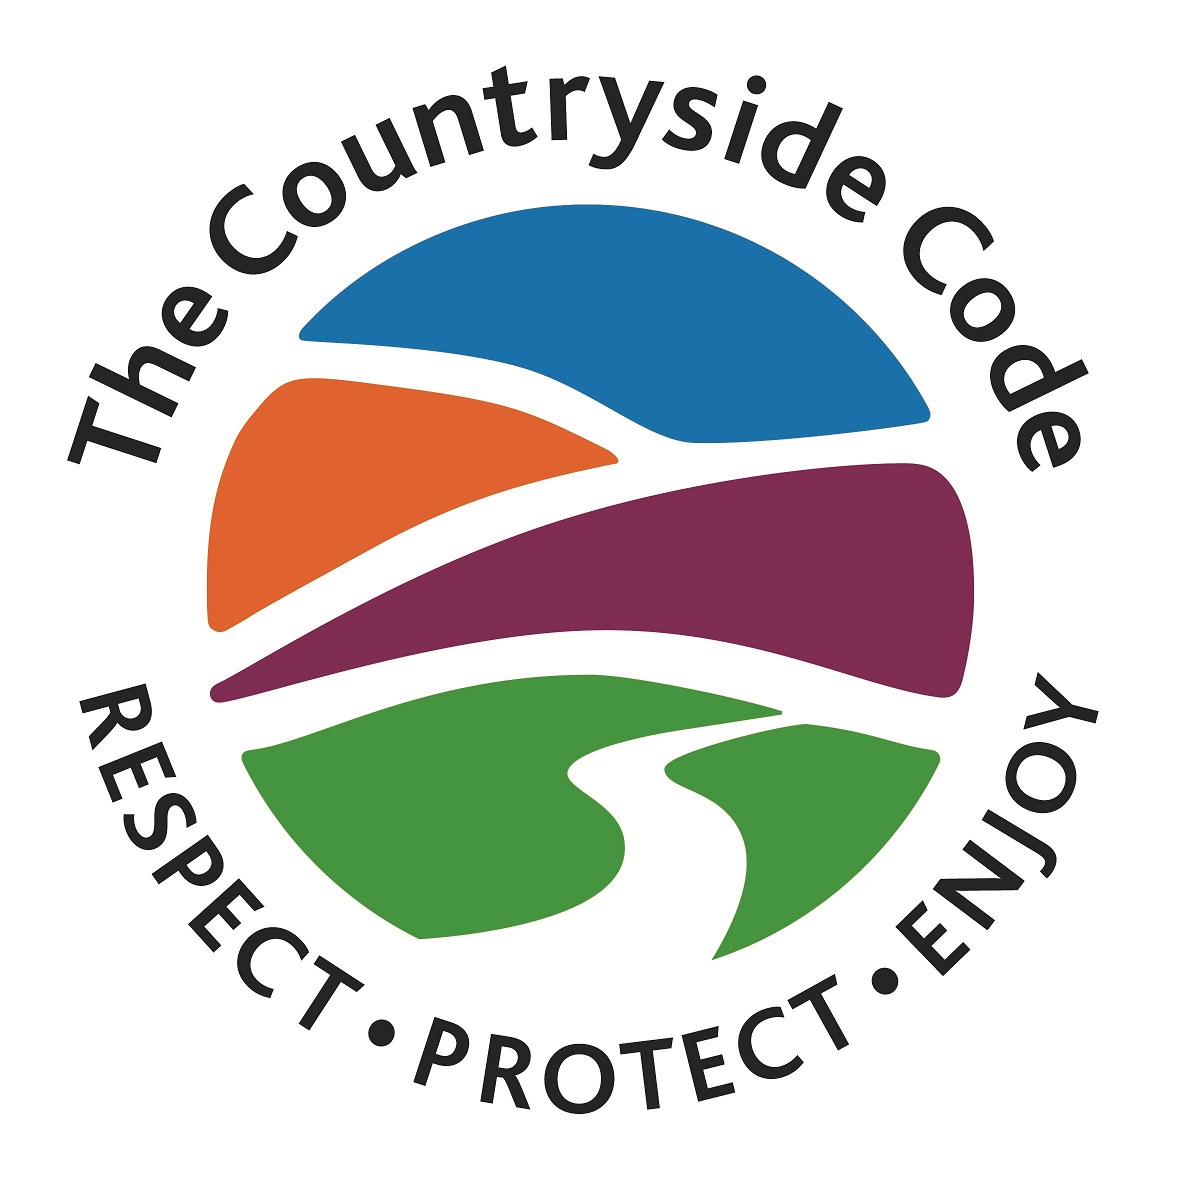 The Countryside Code logo.